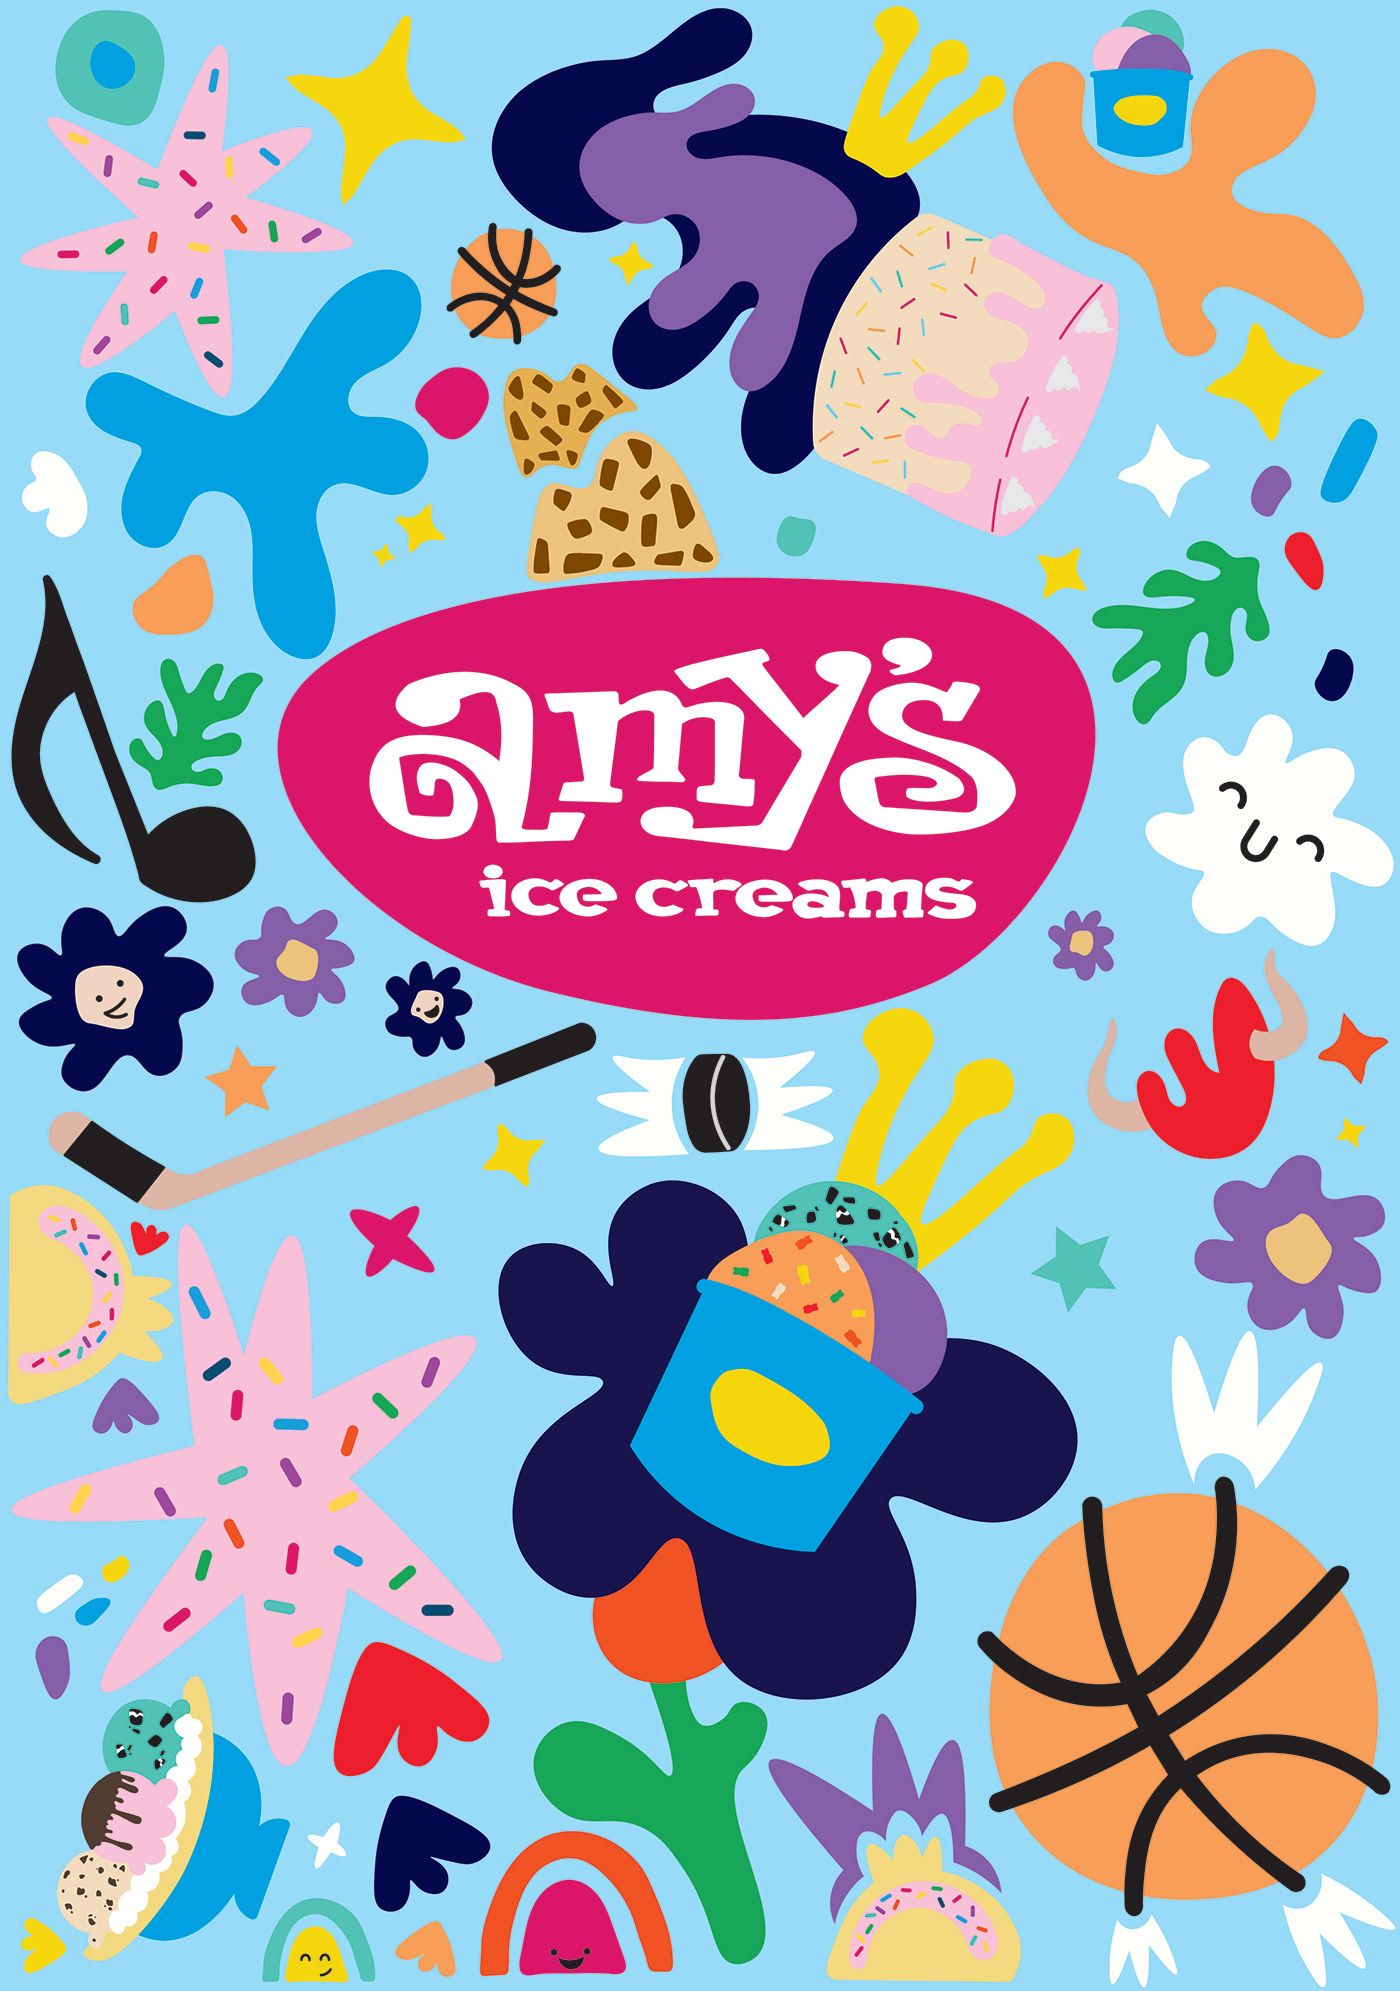 graphic design  ILLUSTRATION  Illustrator designer adobe marketing   Cintiq amy's ice creams H-E-B Center harlem globe trotters